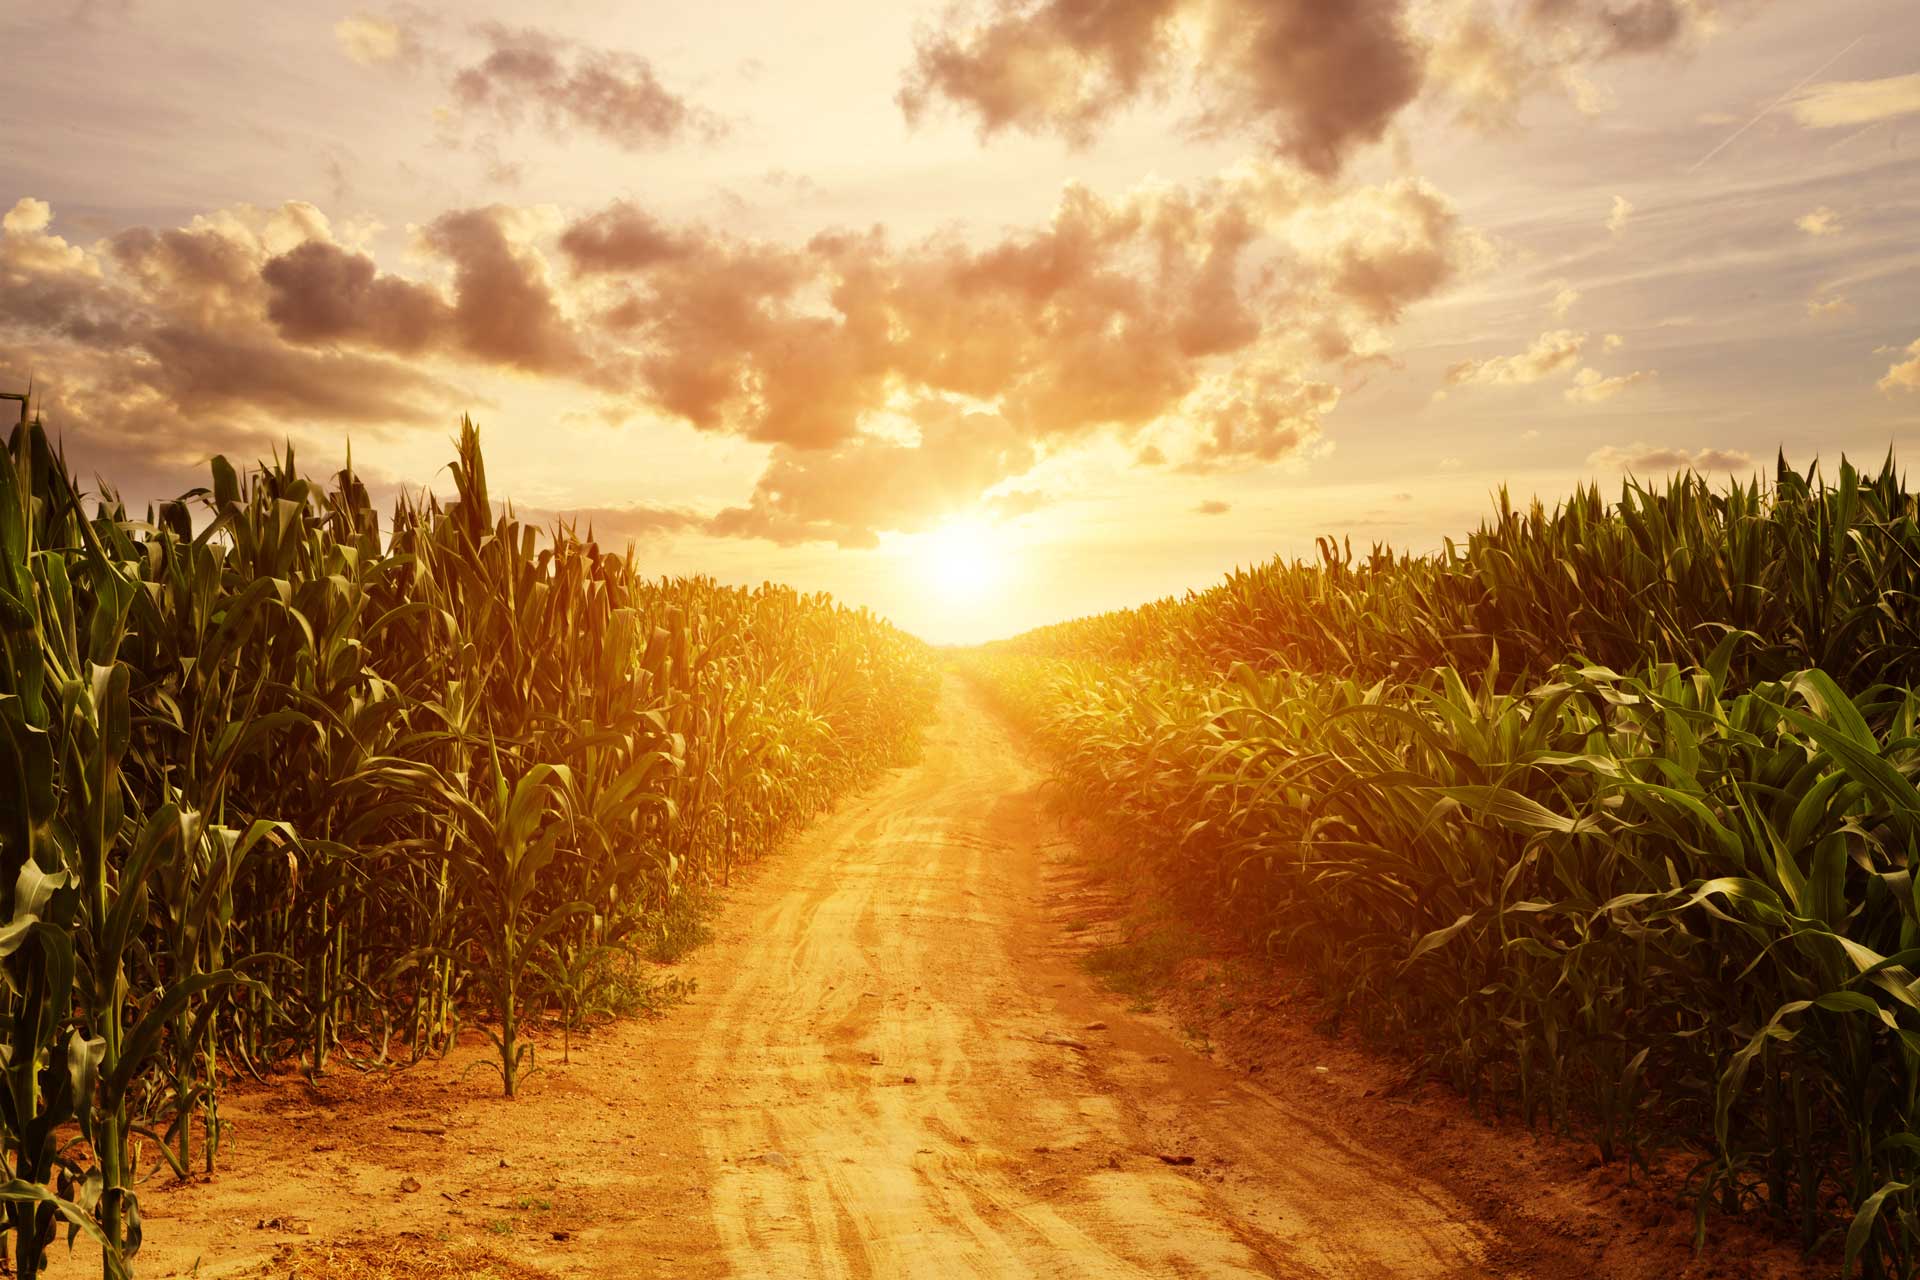 Maize field at sunset